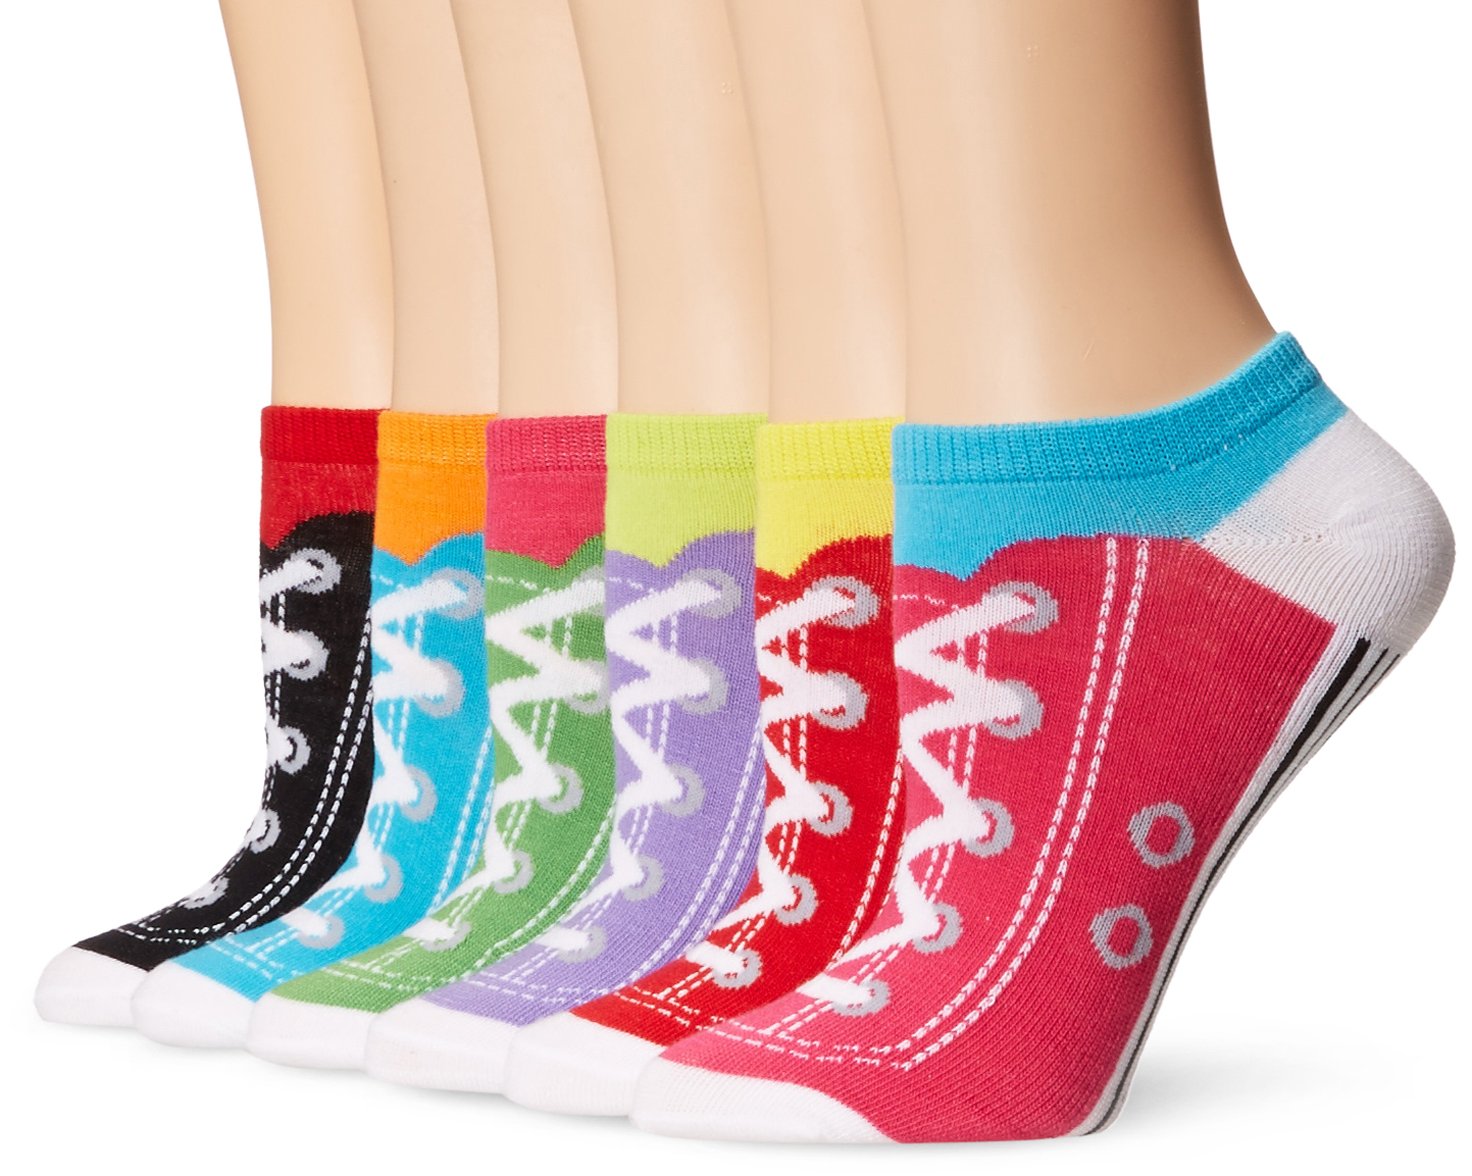 K. Bell Socks womens 6 Pair Pack Fun Pop Culture Funny Novelty Low Cut No Show Socks